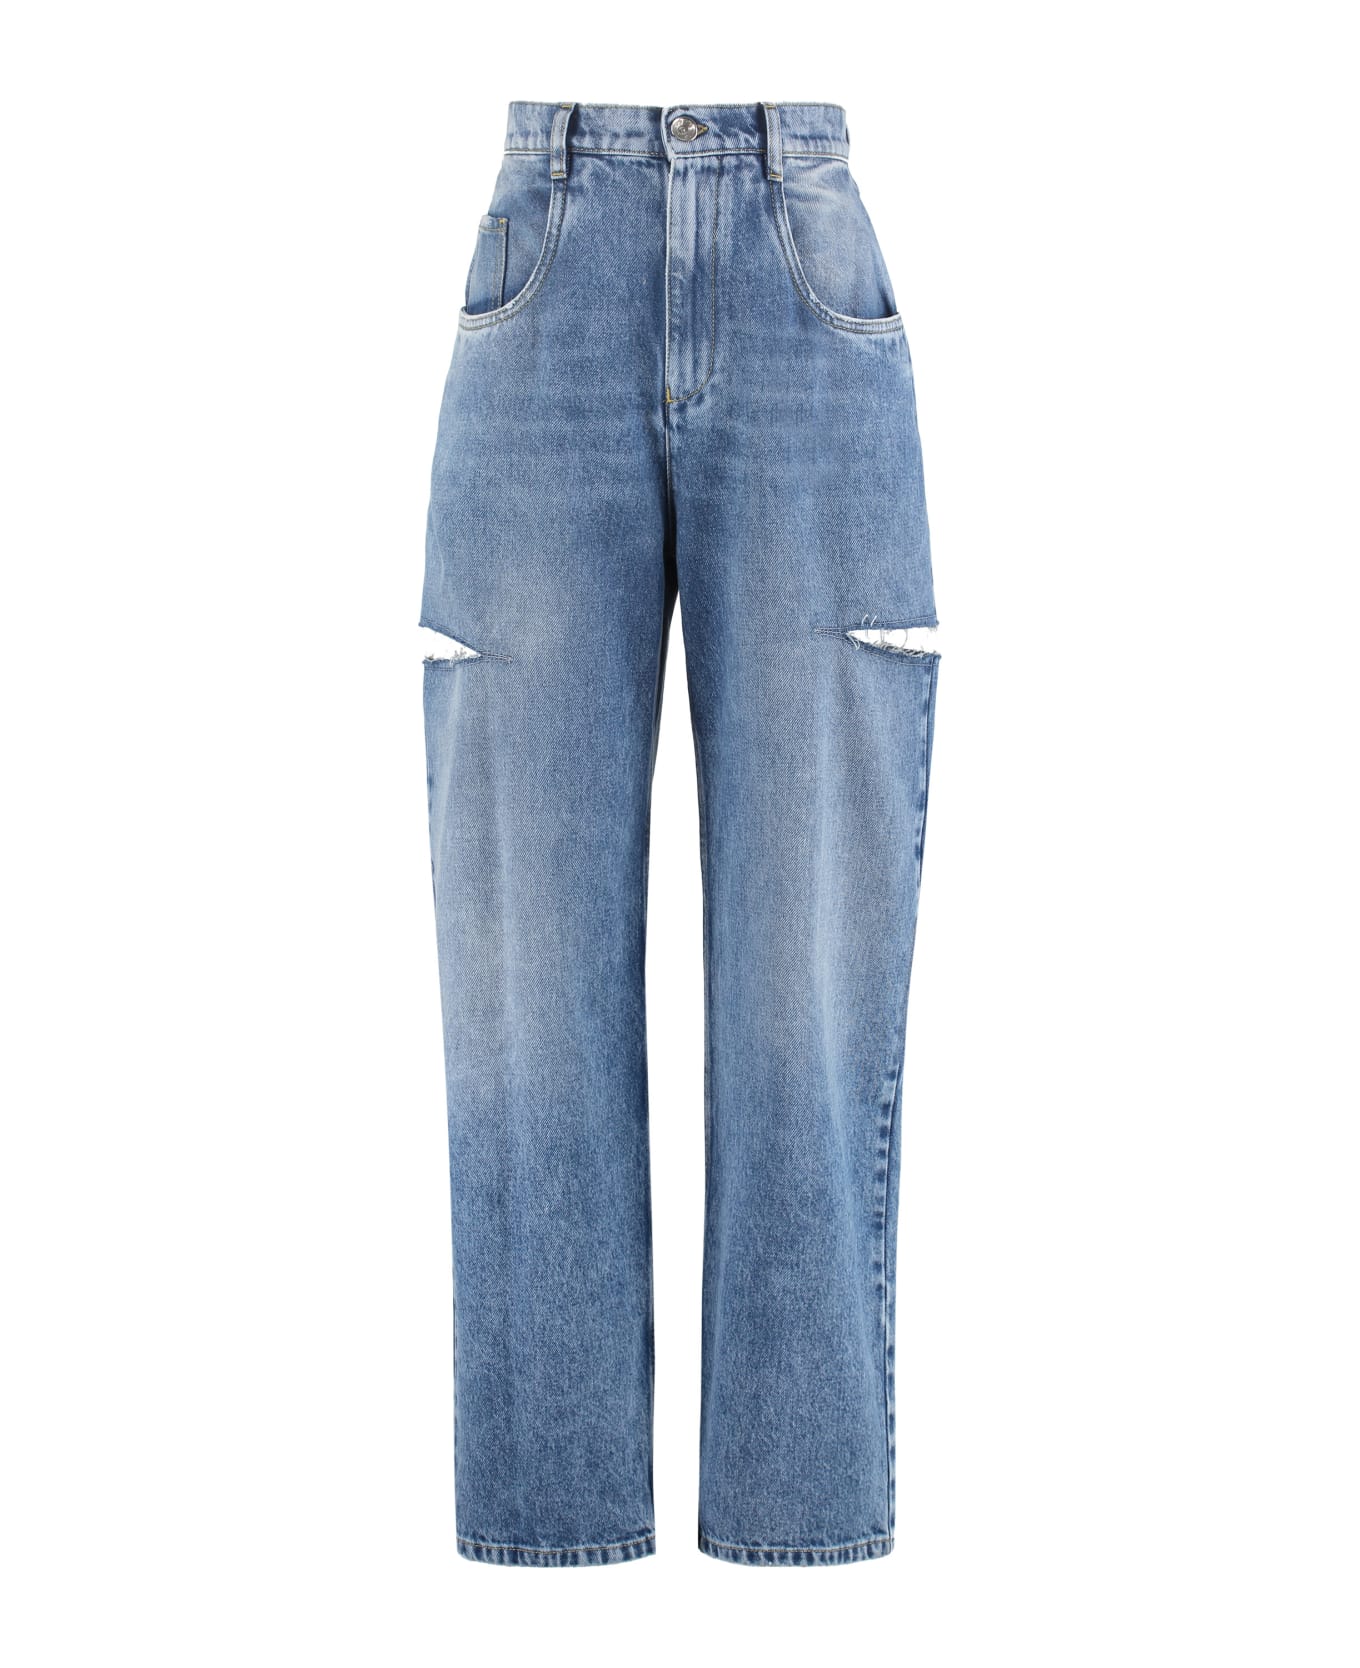 Maison Margiela Side Slit 5 Pockets Jeans - Blue デニム